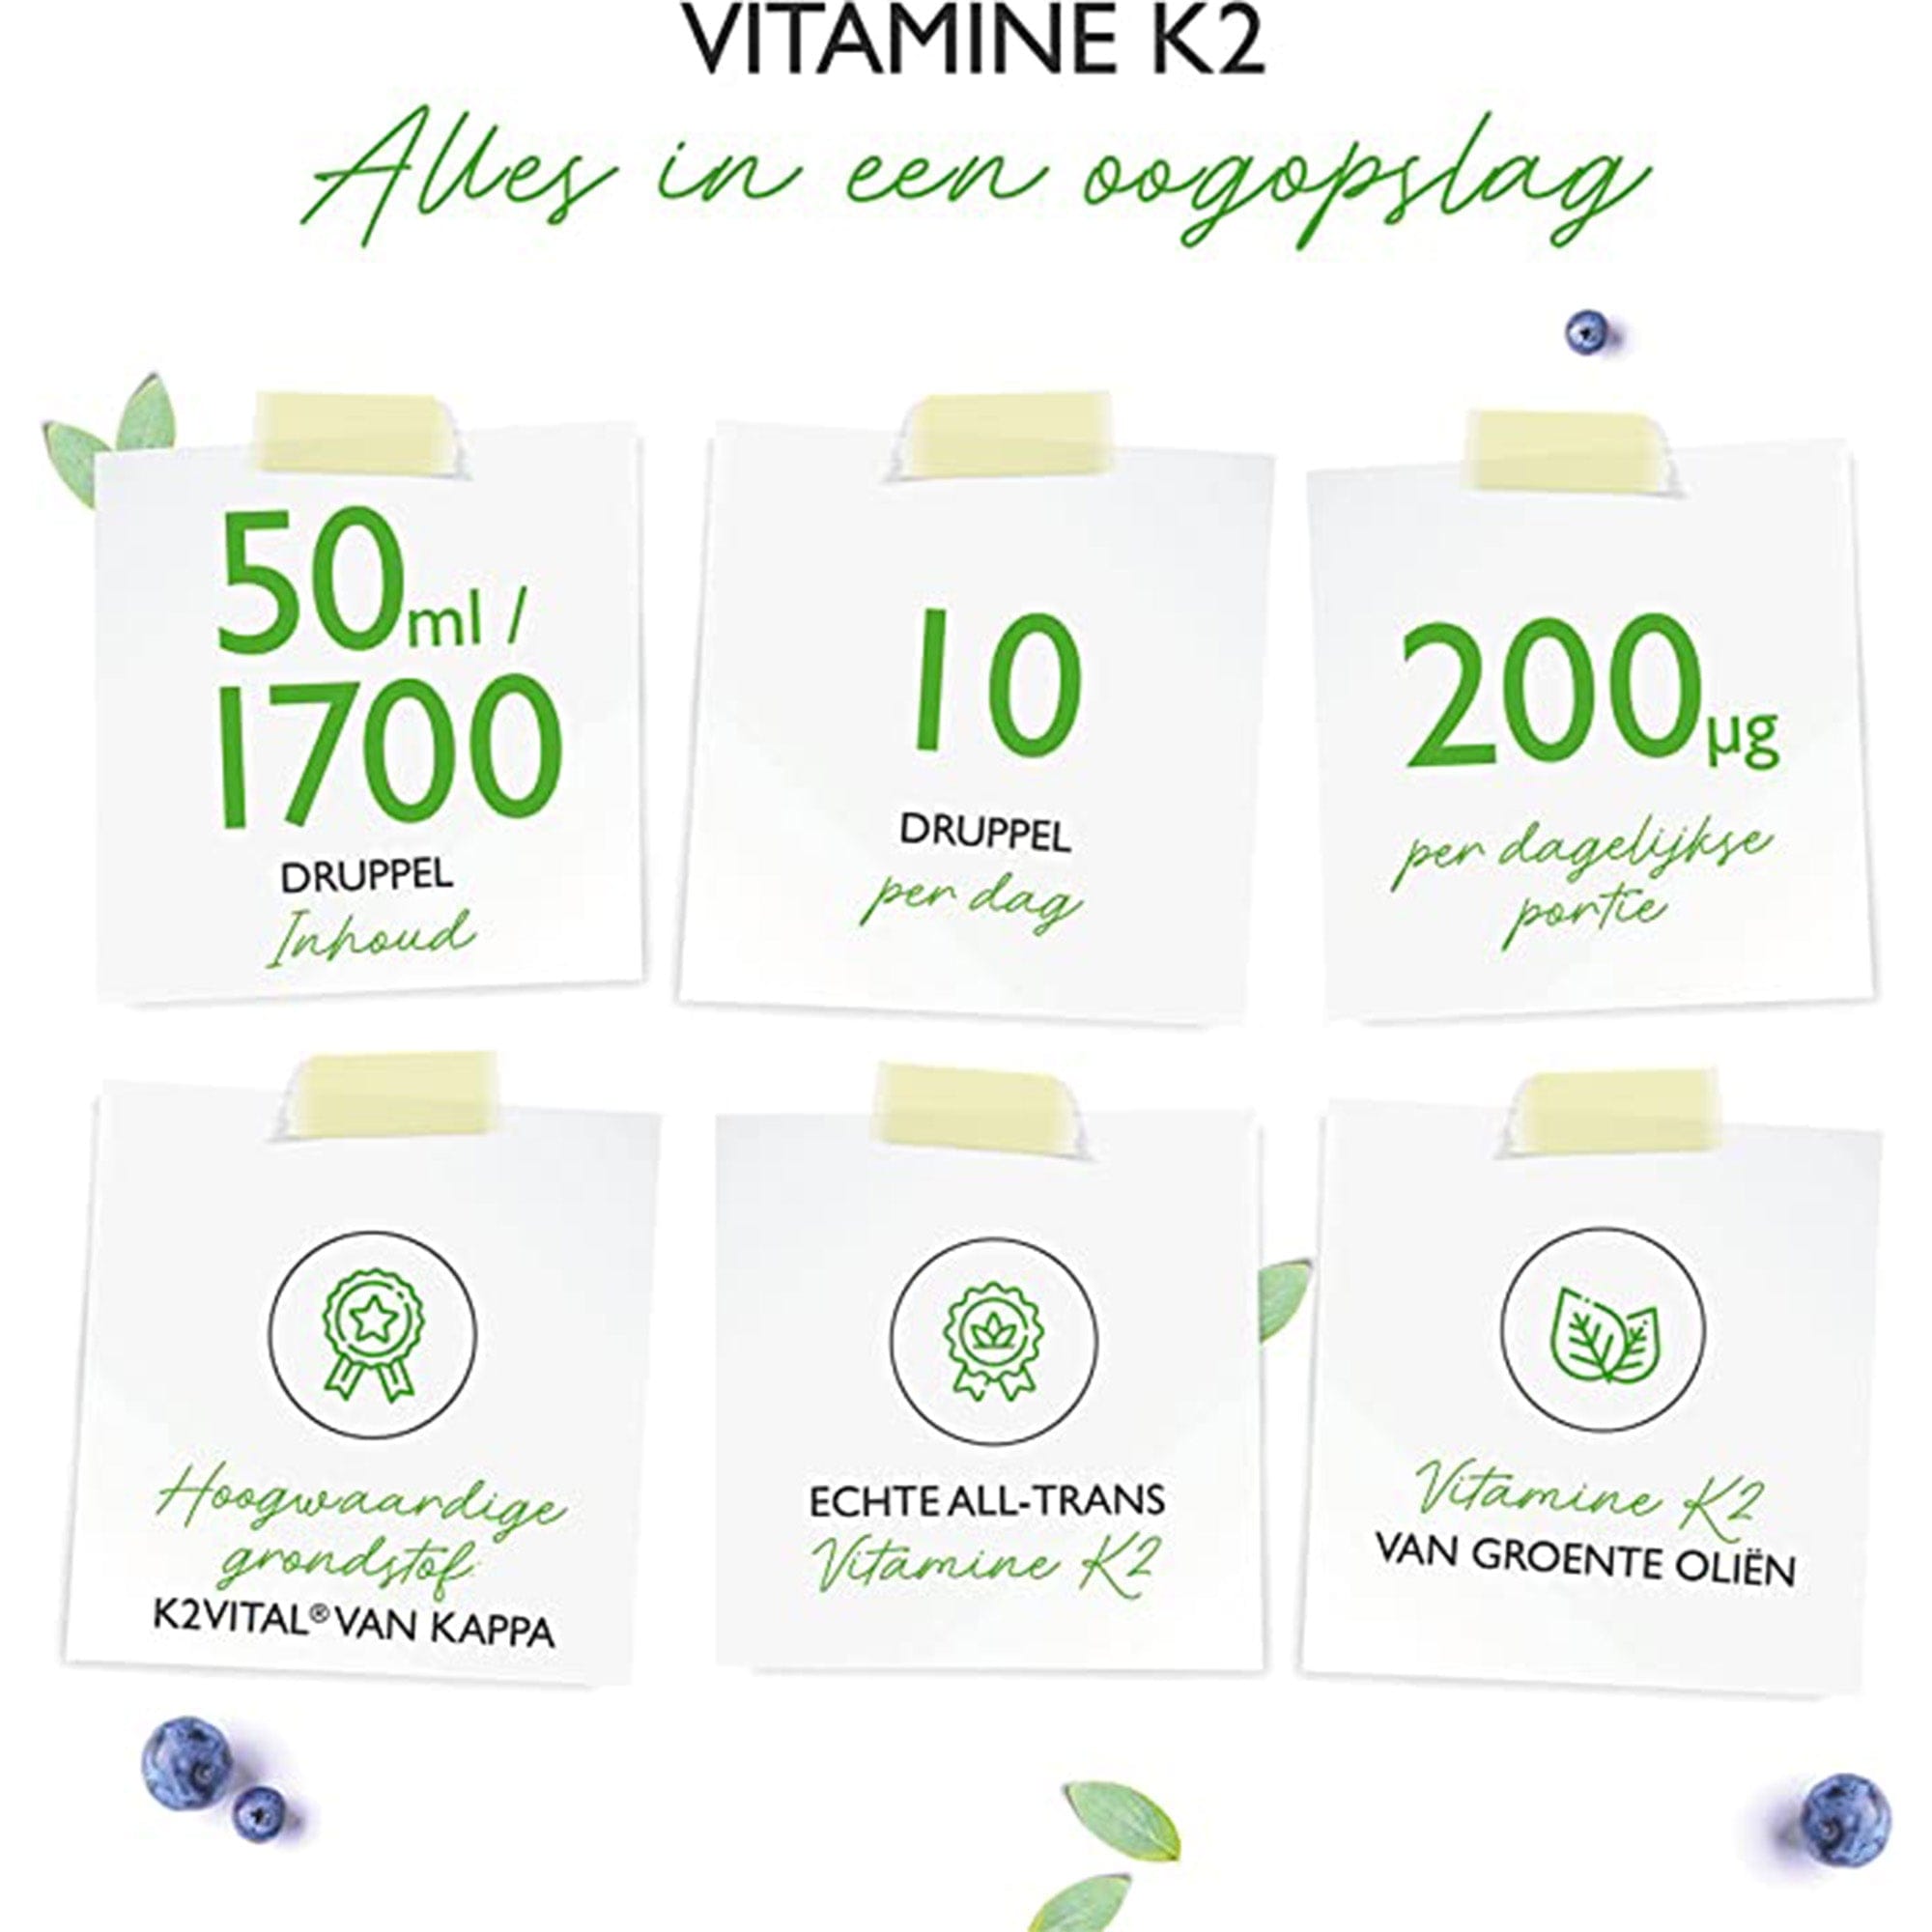 Vitamine K2 MK-7 200µg | 50 ml (1700 druppels) | Premium: All-Trans gehalte >99.7%  | Zonder alcohol | Veganistisch | Vit4ever